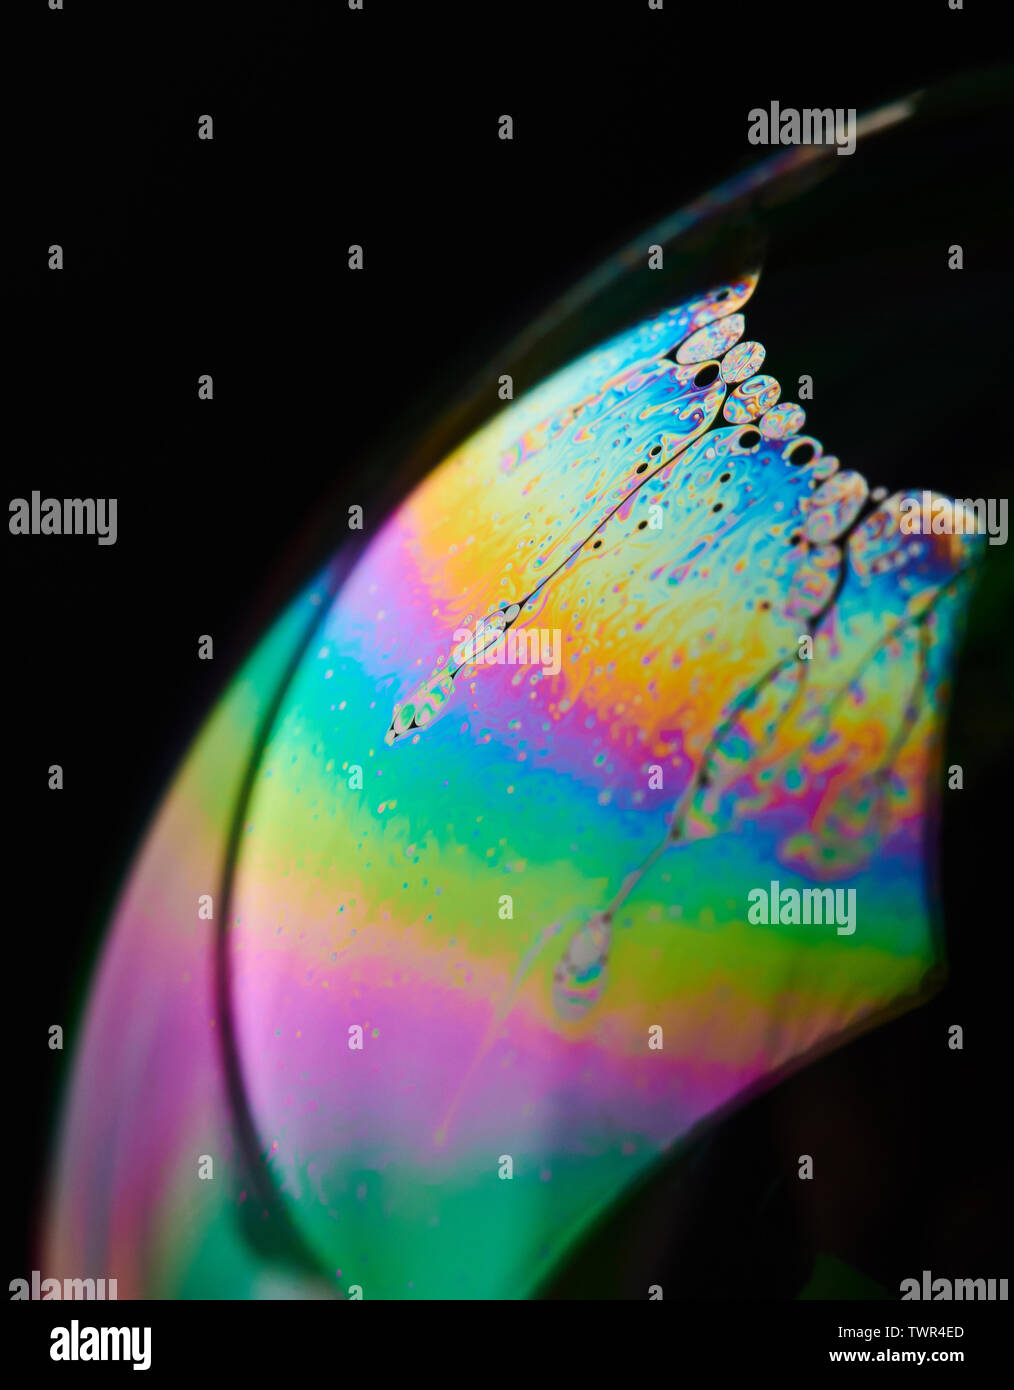 Abstarct bunte Flüssigkeit Sphäre Hintergrund Makro Nahaufnahme Stockfoto